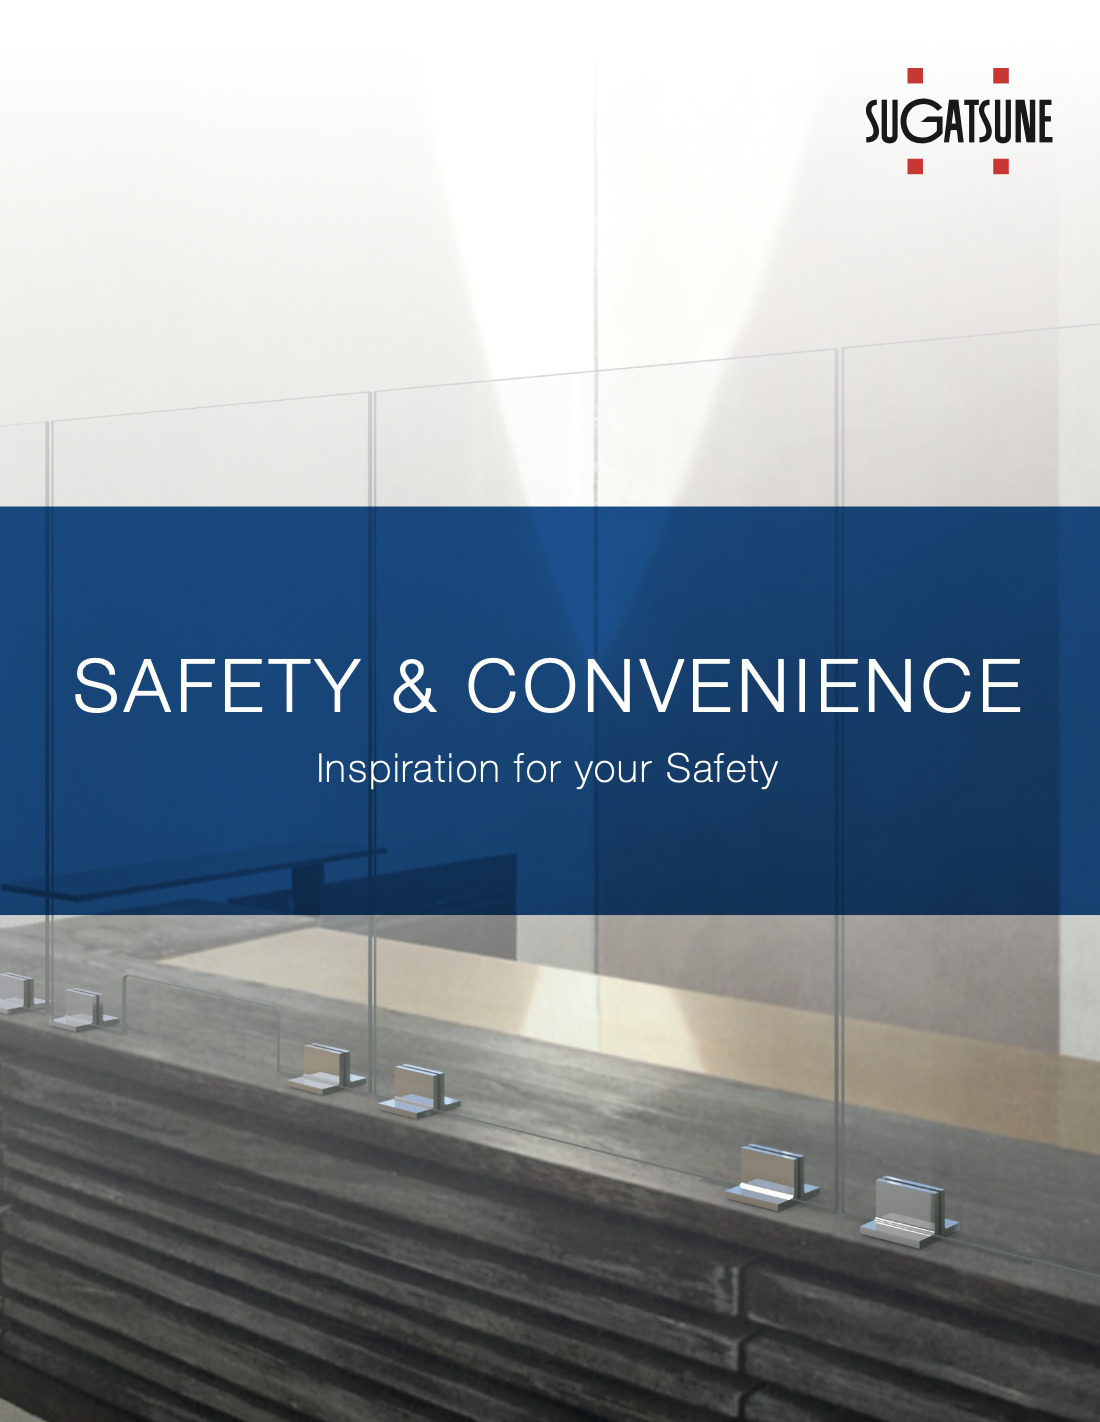 Safety & Convenience (Glass Shields Hardware) 2020